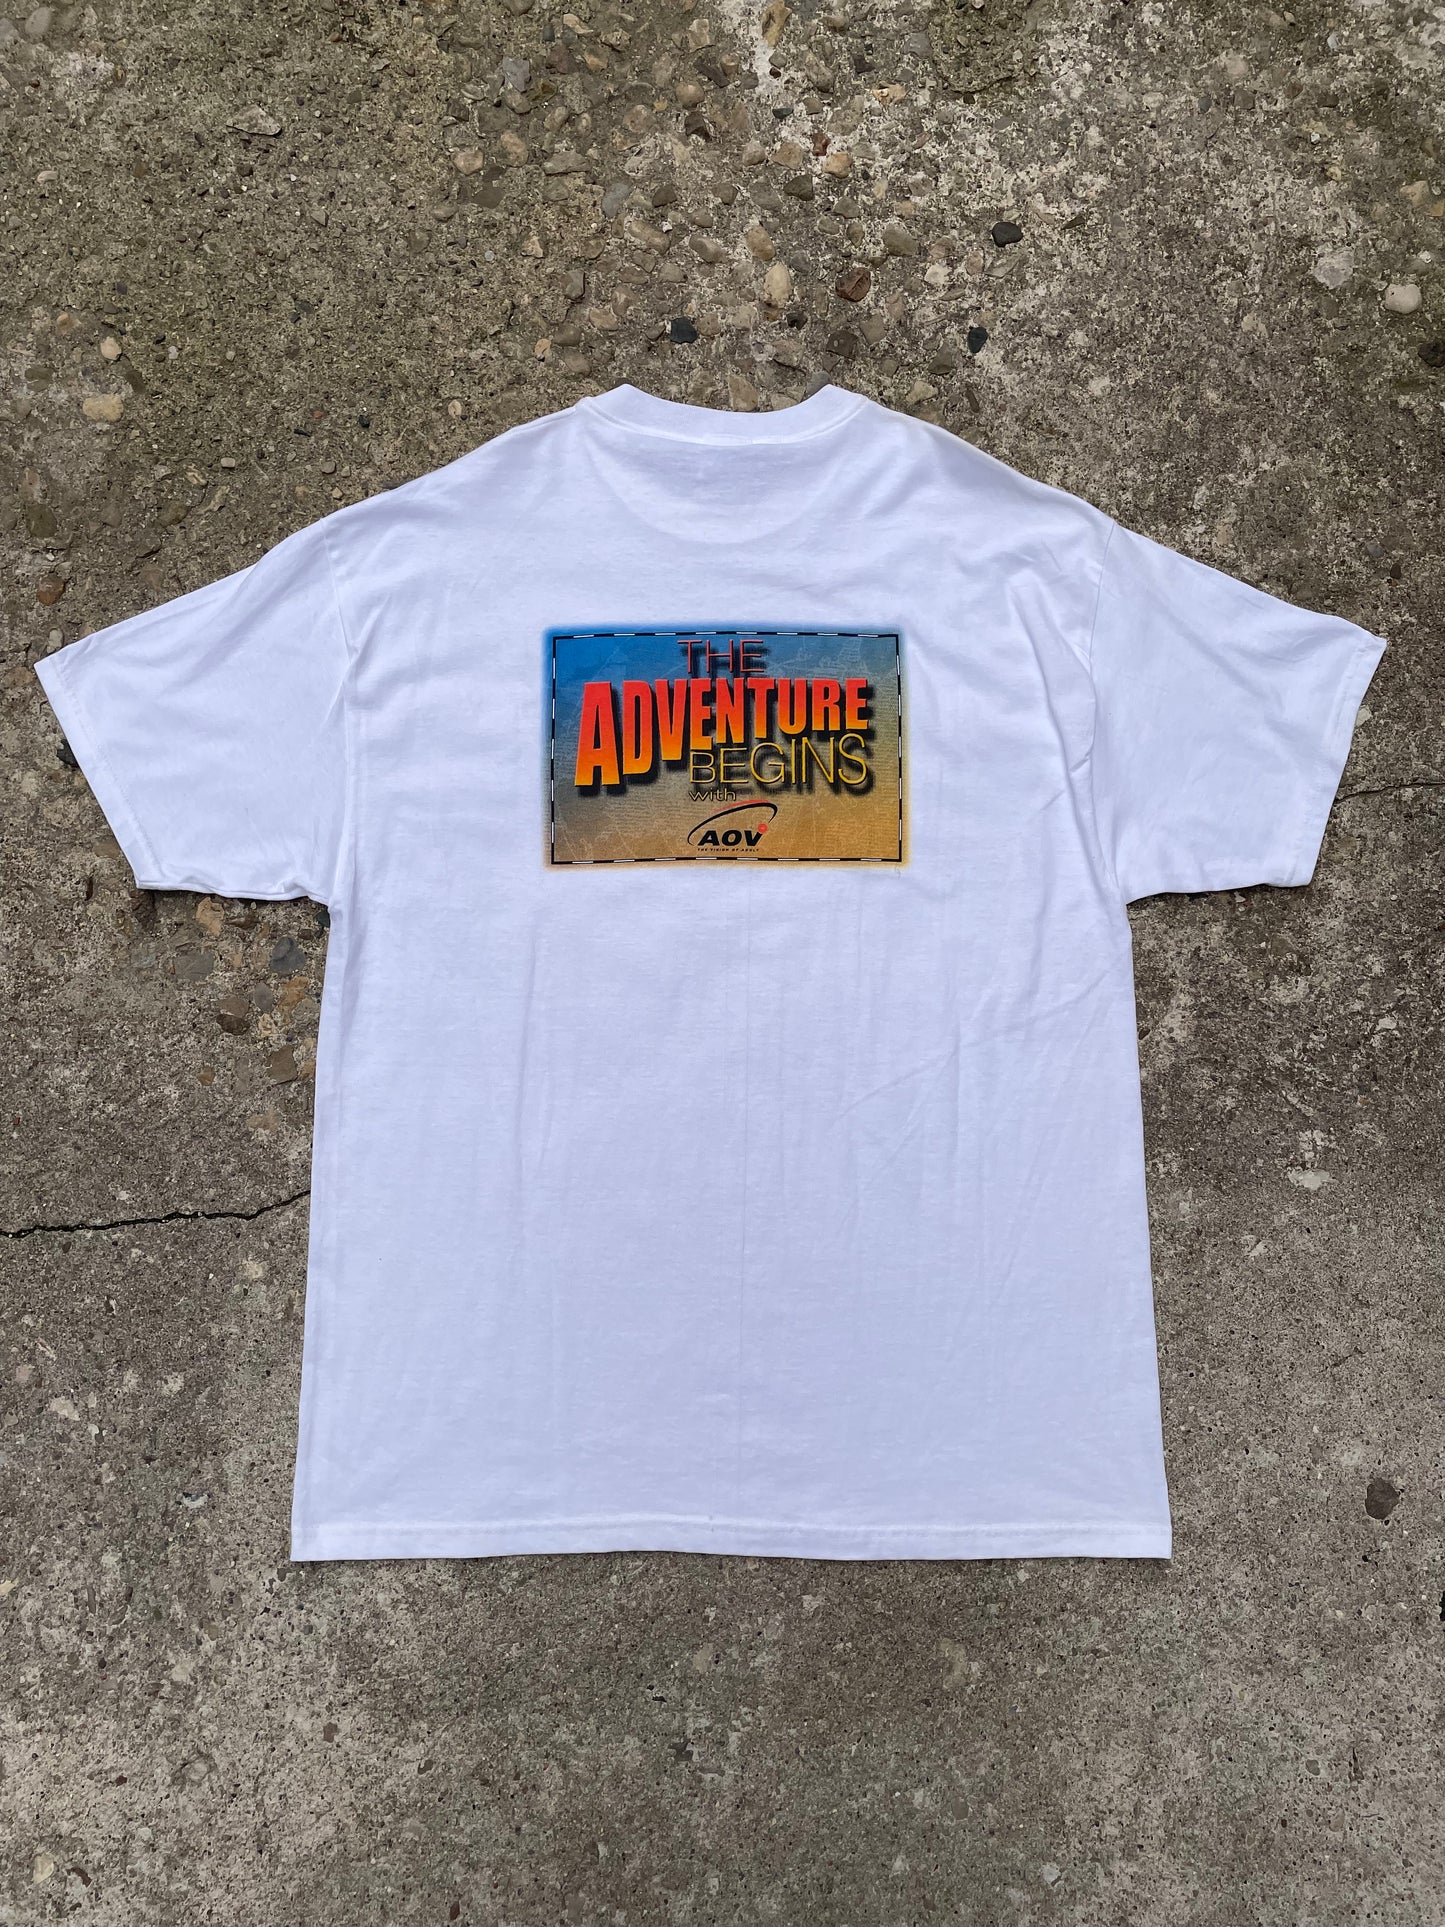 1990's/2000's AOV Adult Movie Channel T-Shirt - XL